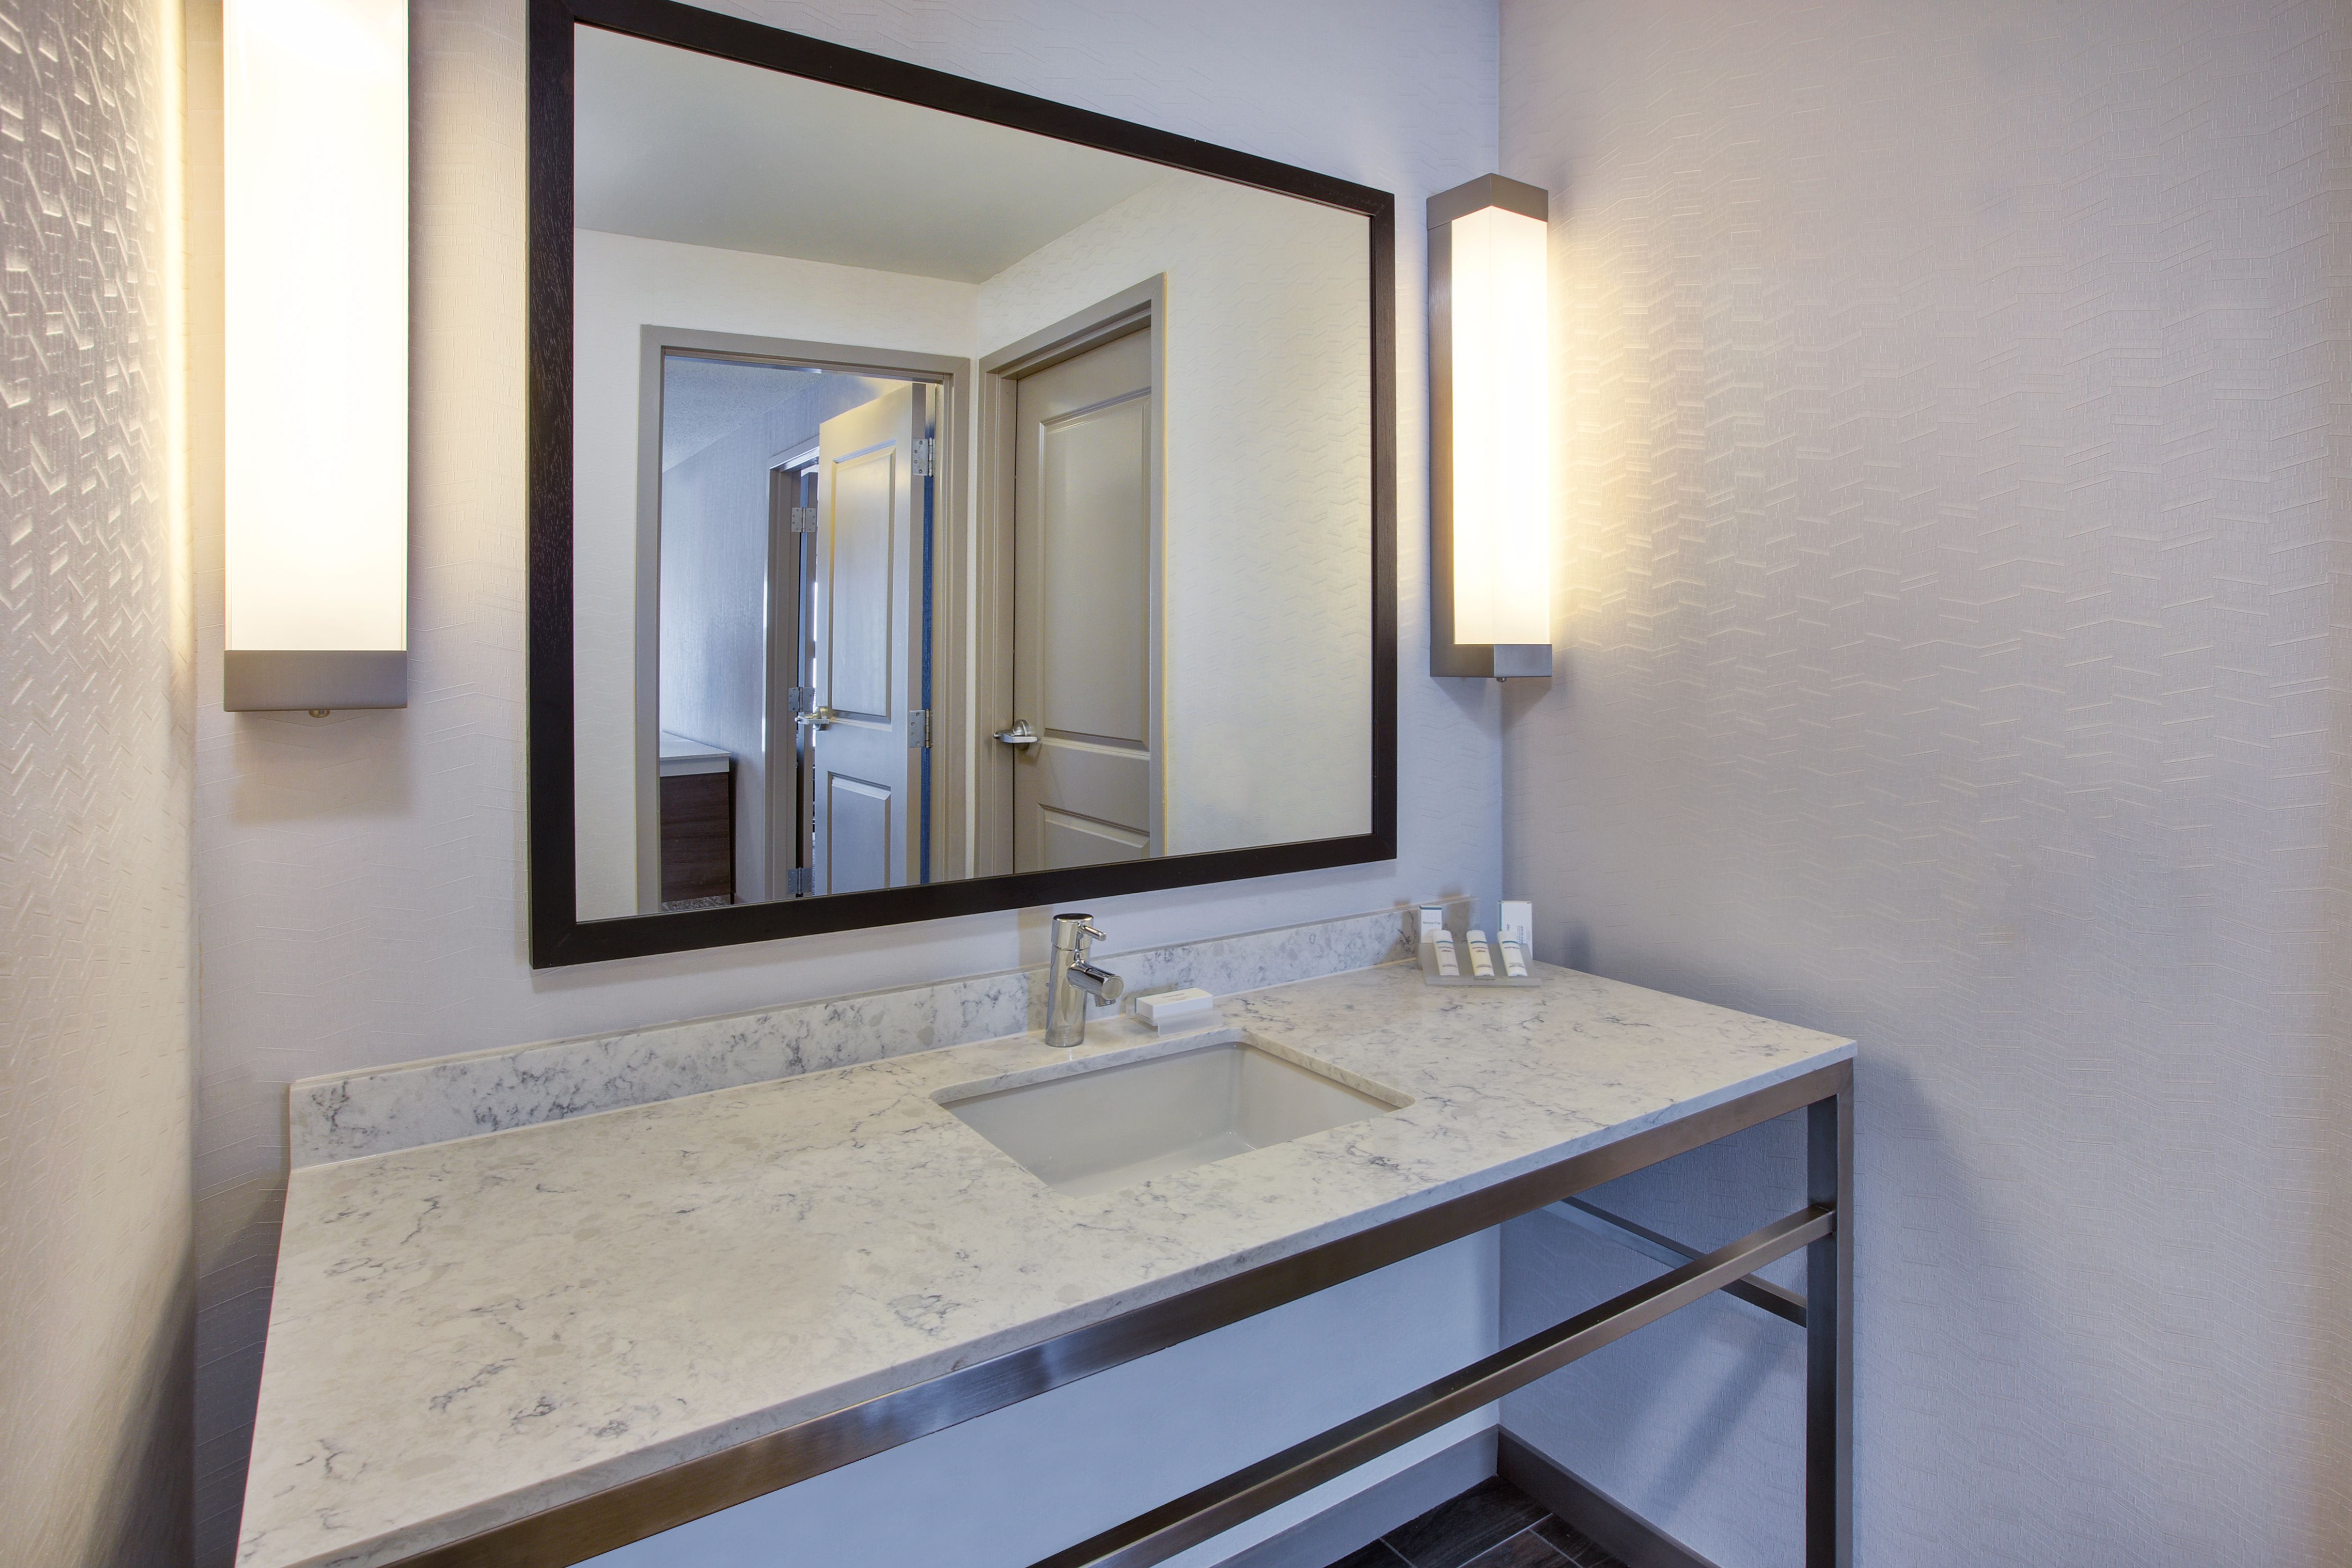 Bathroom with vanity mirror and sink